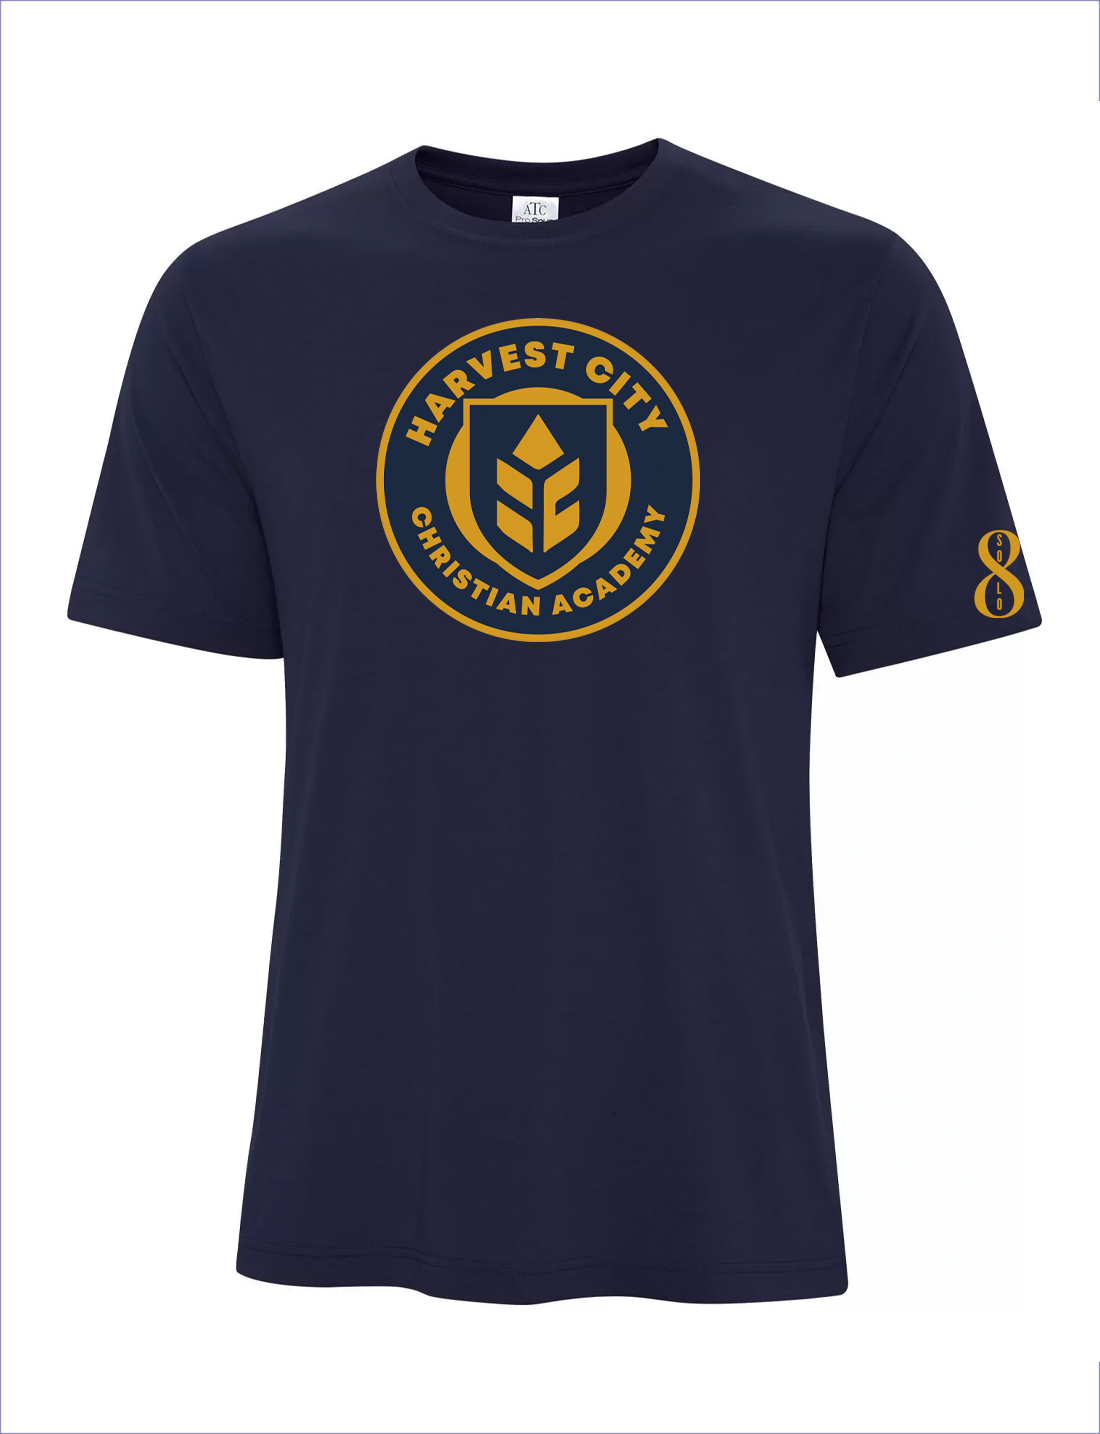 Harvest City Logo T-Shirt